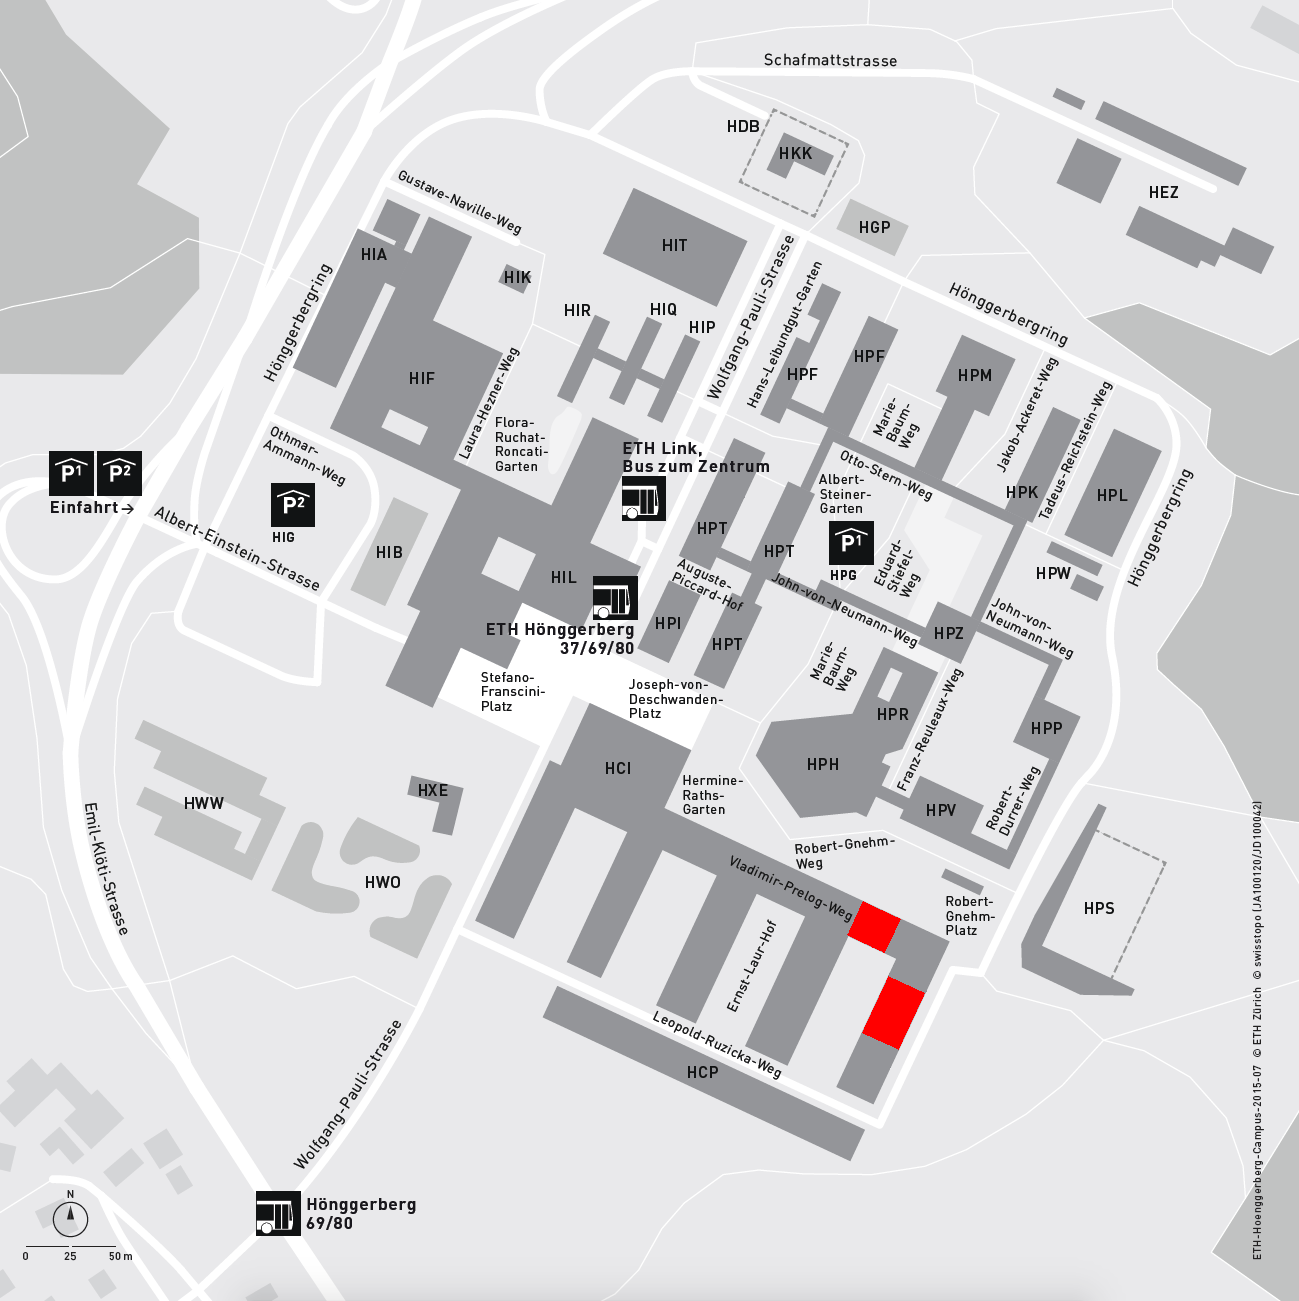 Enlarged view: Map of Hönggerberg Campus